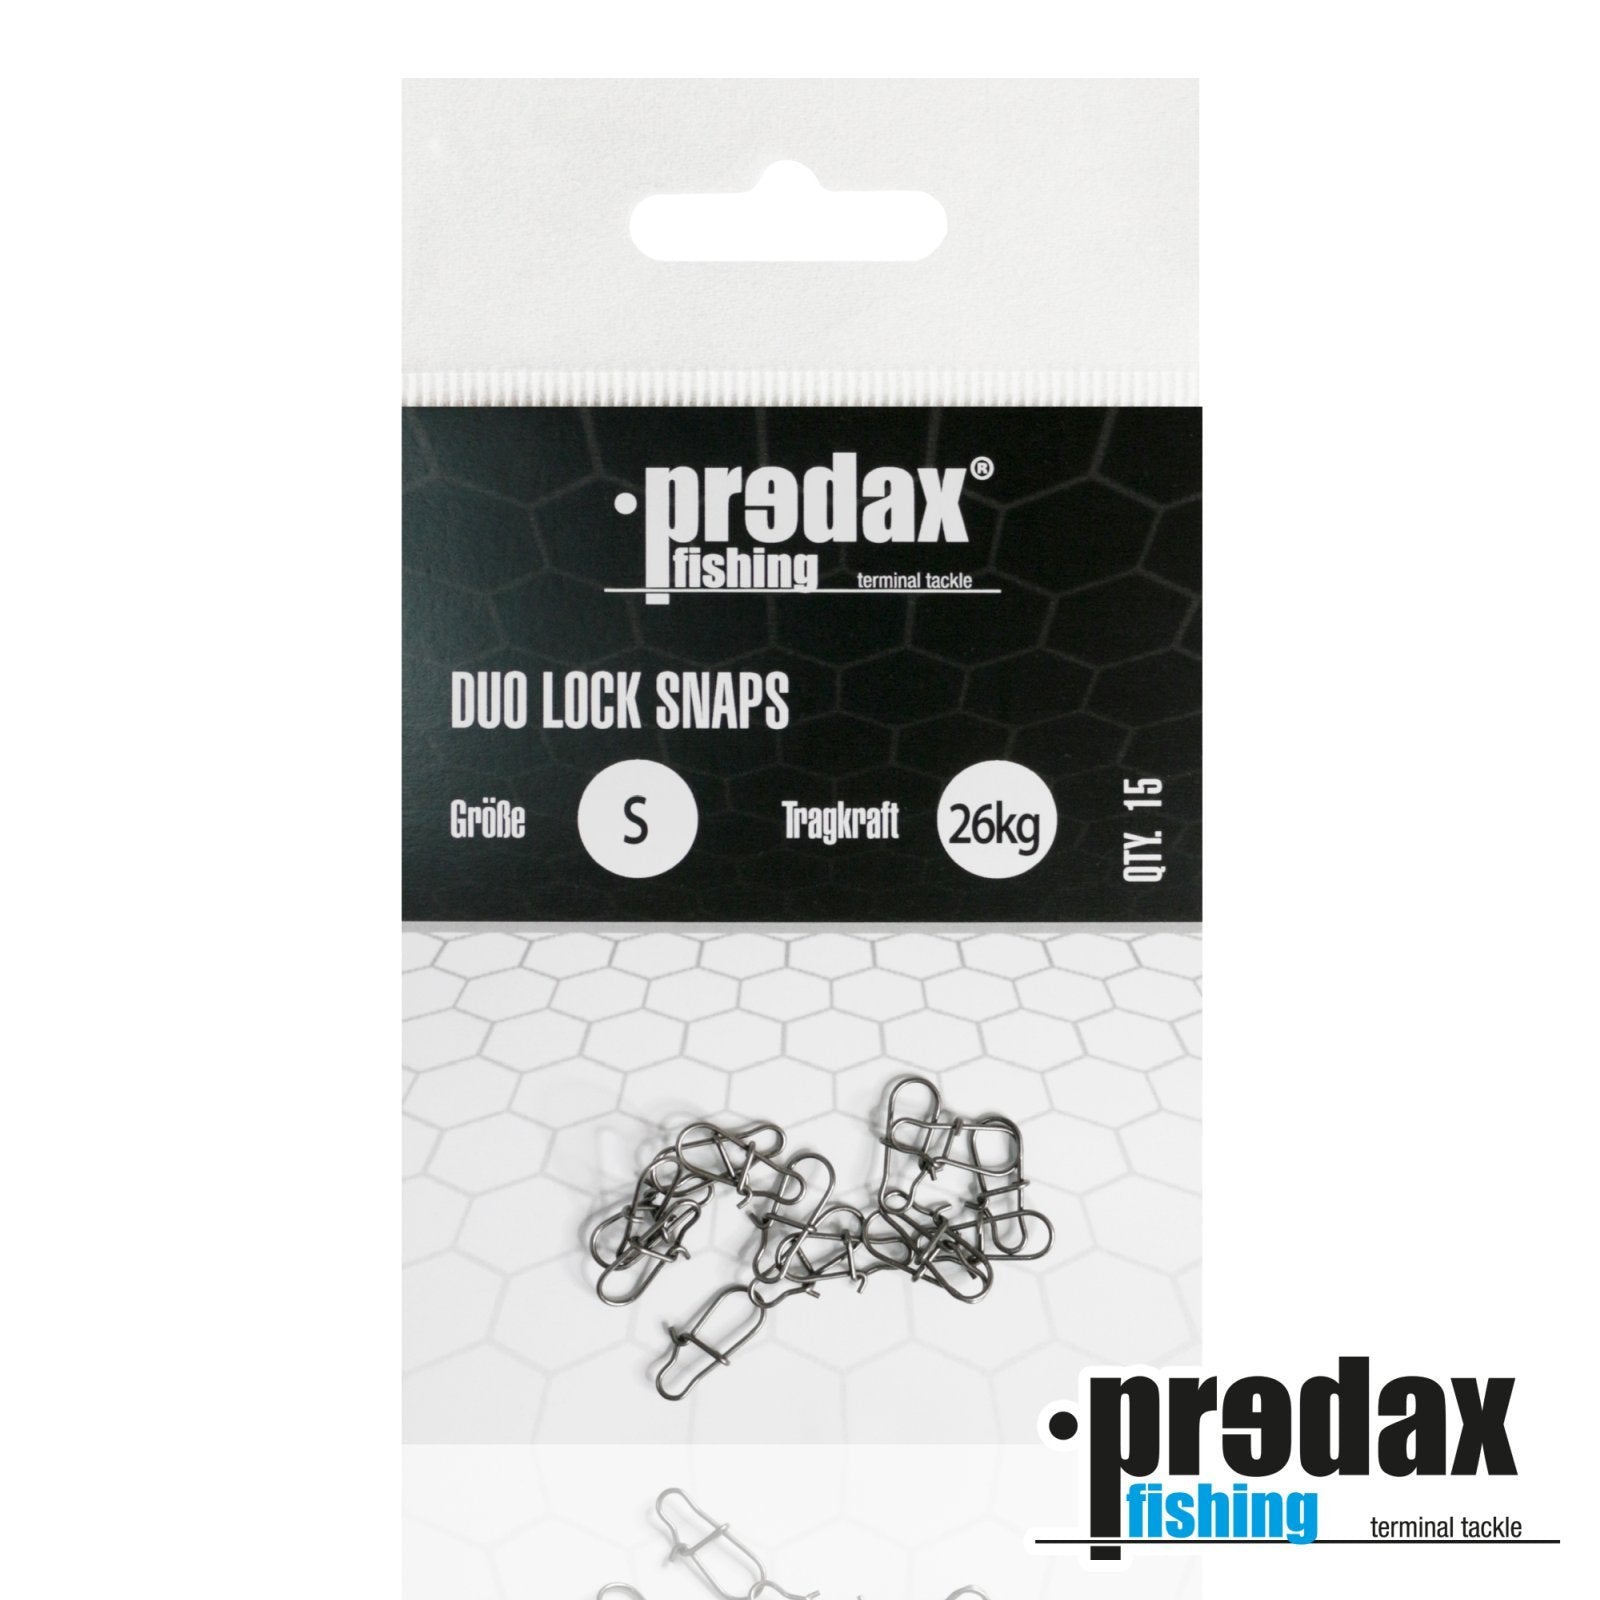 Predax Duo Lock Snaps S